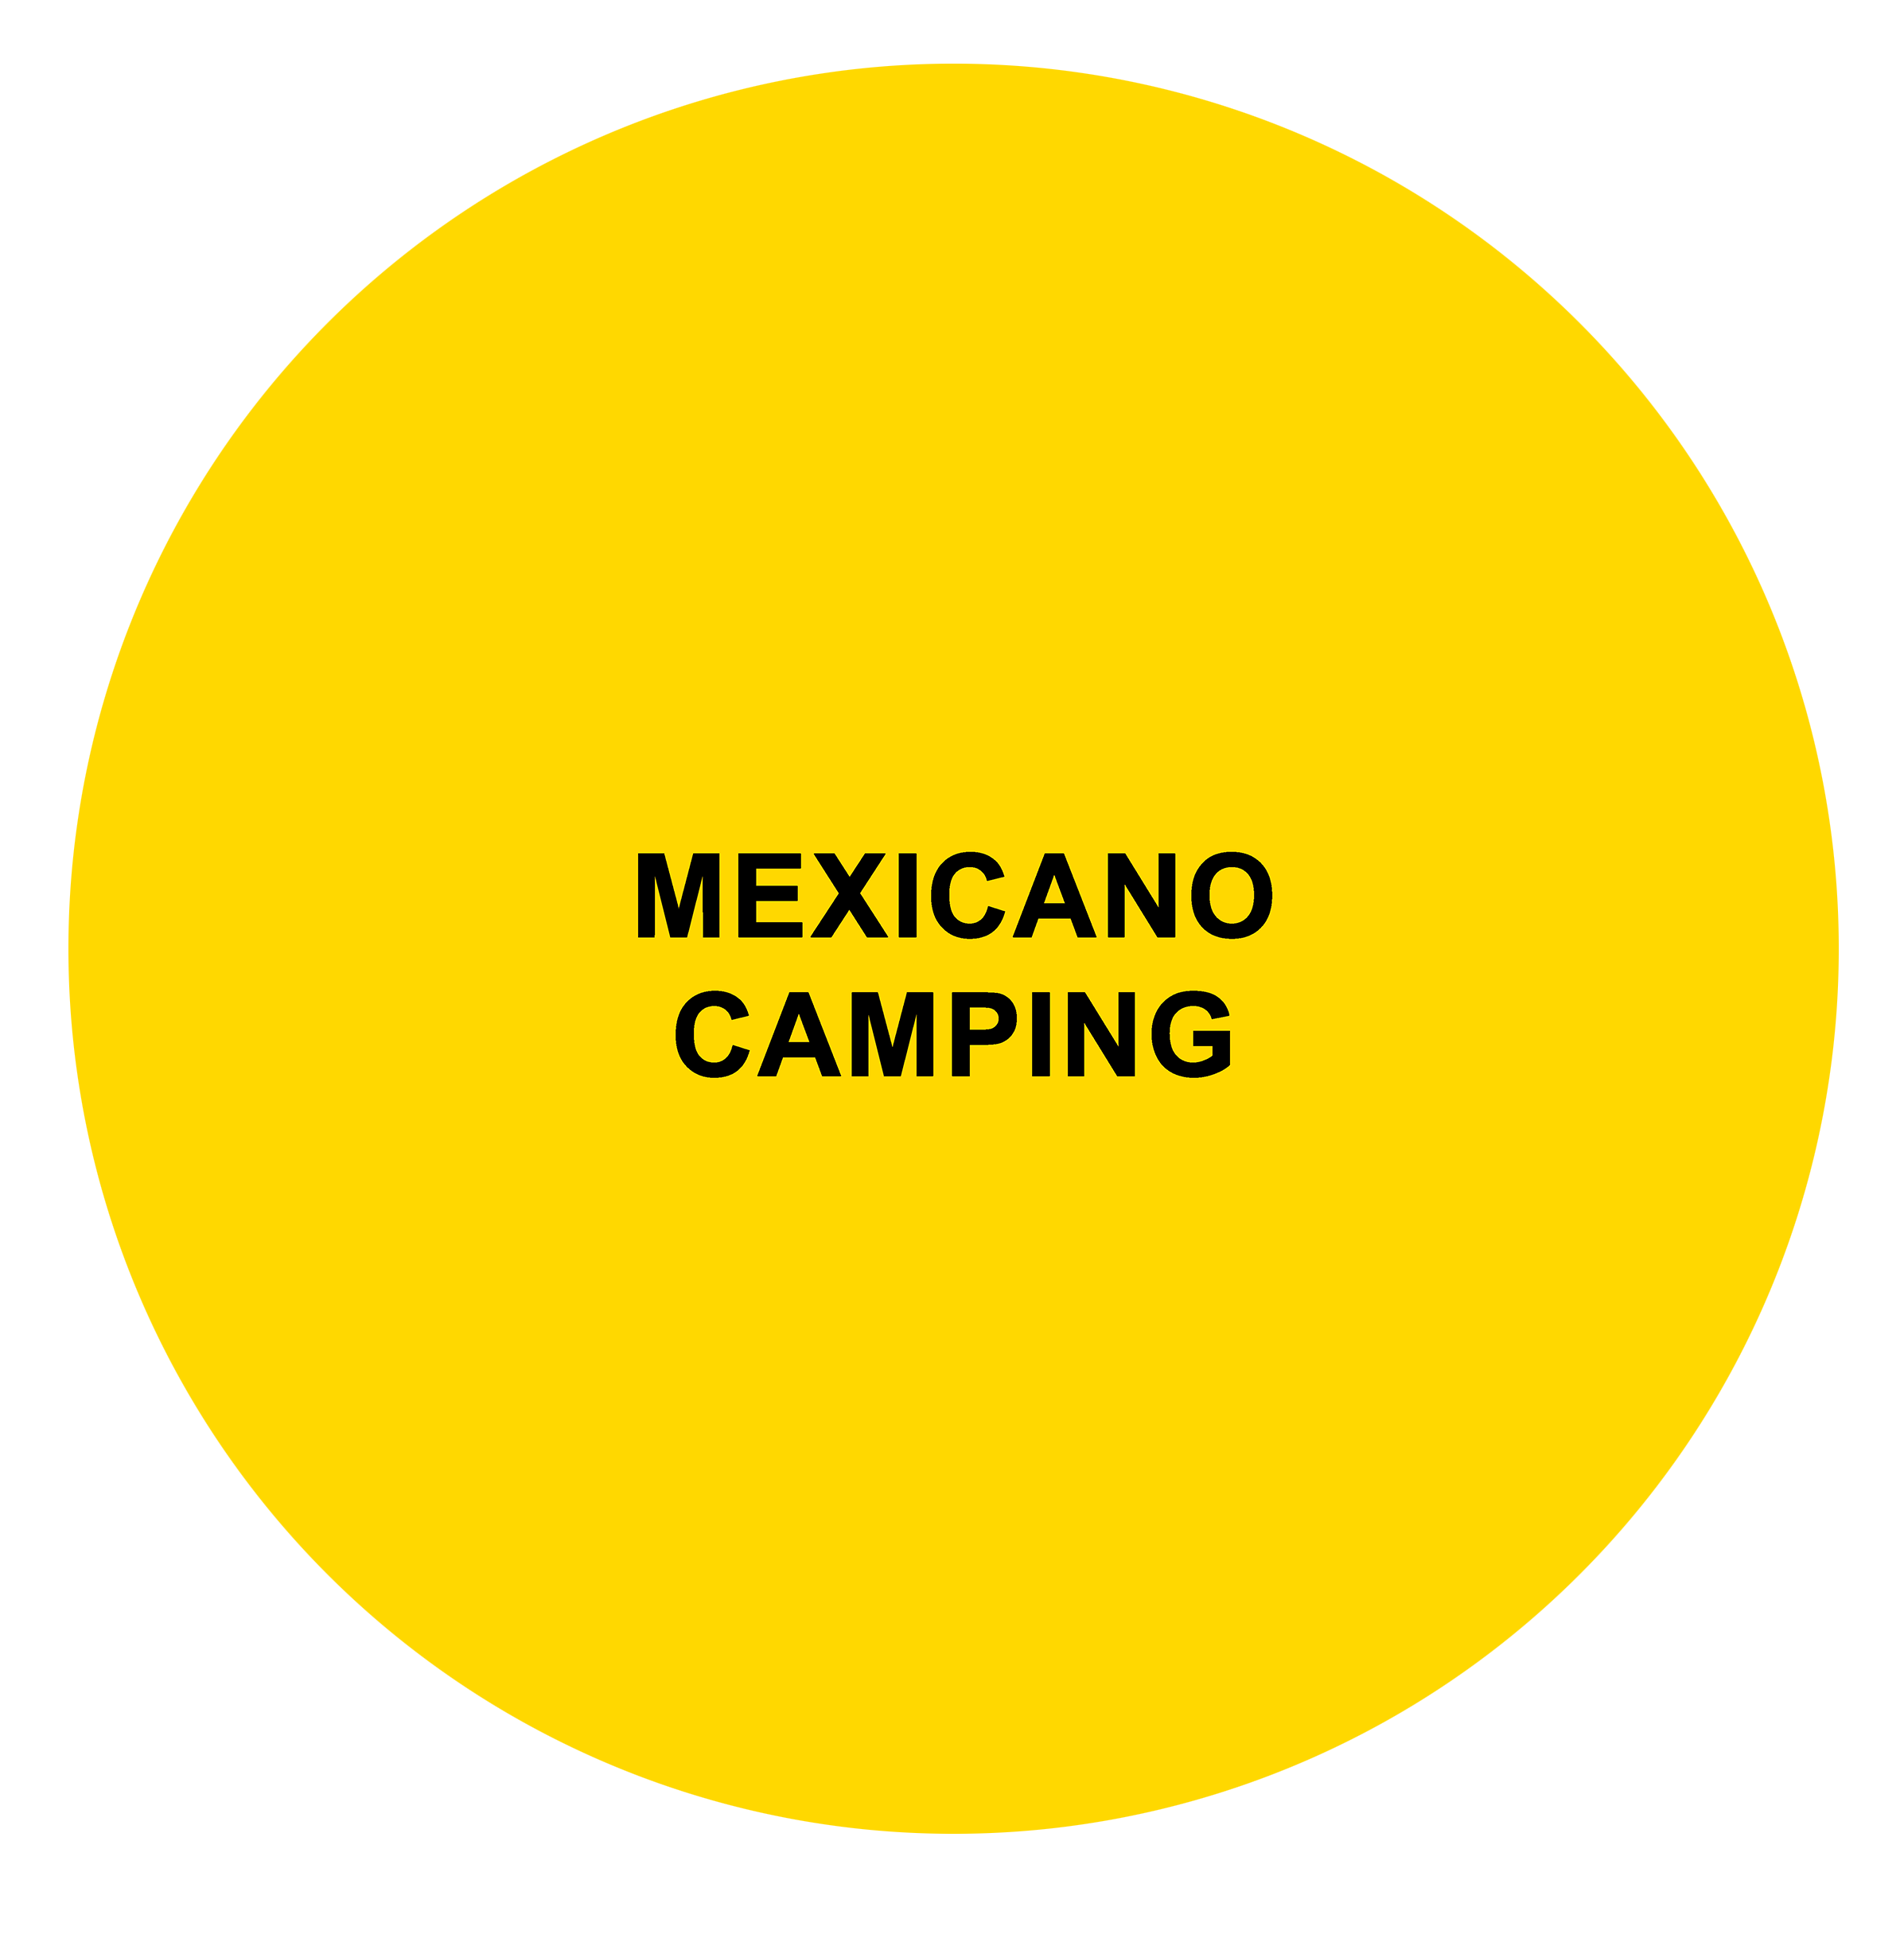 MEXICANO CAMPING